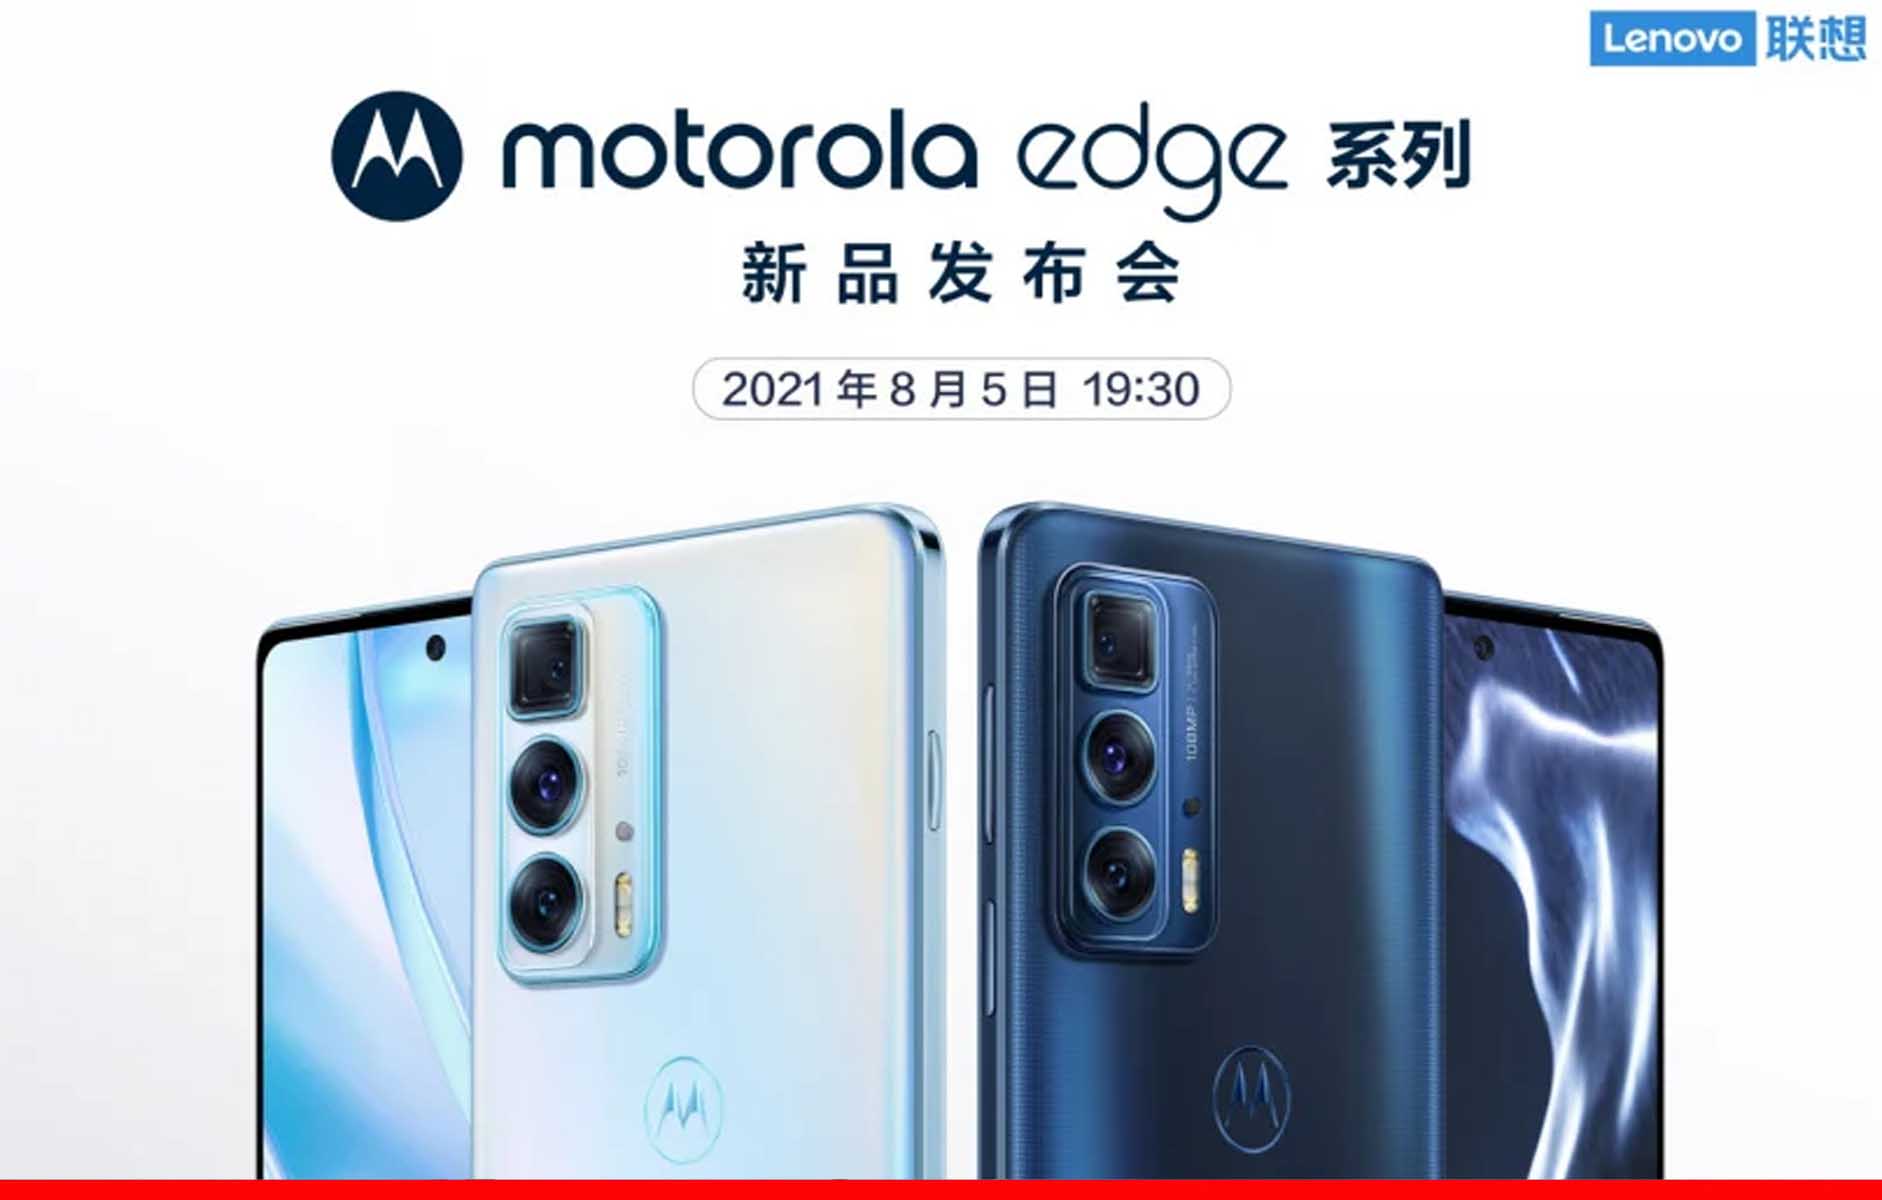 सबसे पतला और हल्का 108MP फोन Motorola Edge S Pro लॉन्च